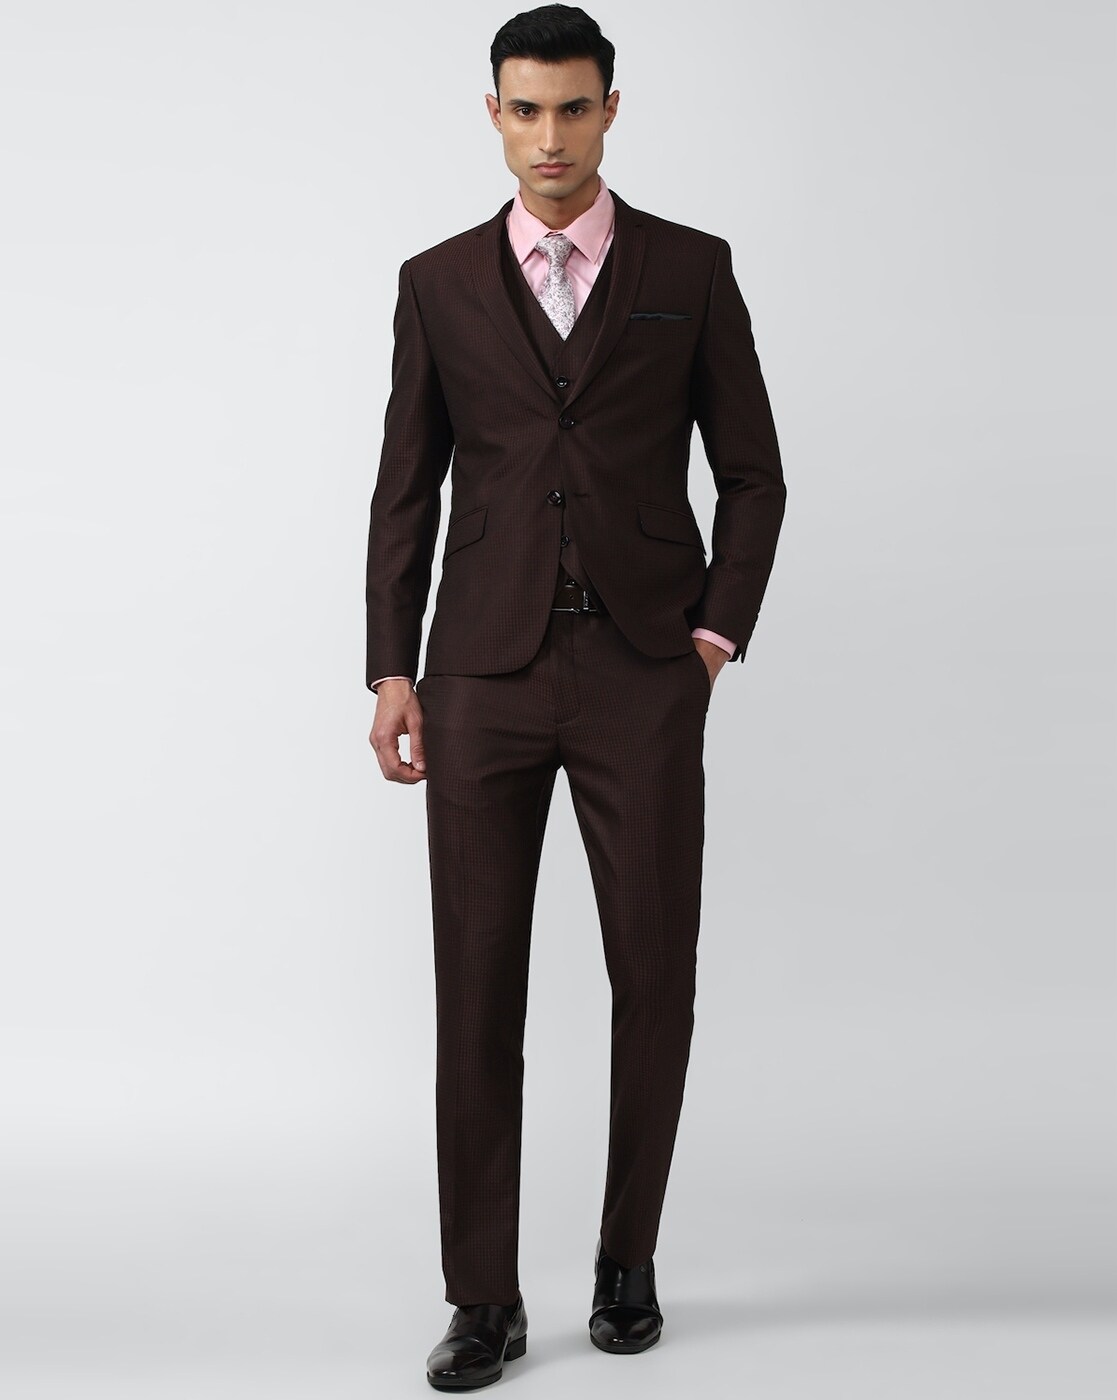 Suits in Brown by HUGO BOSS | Men